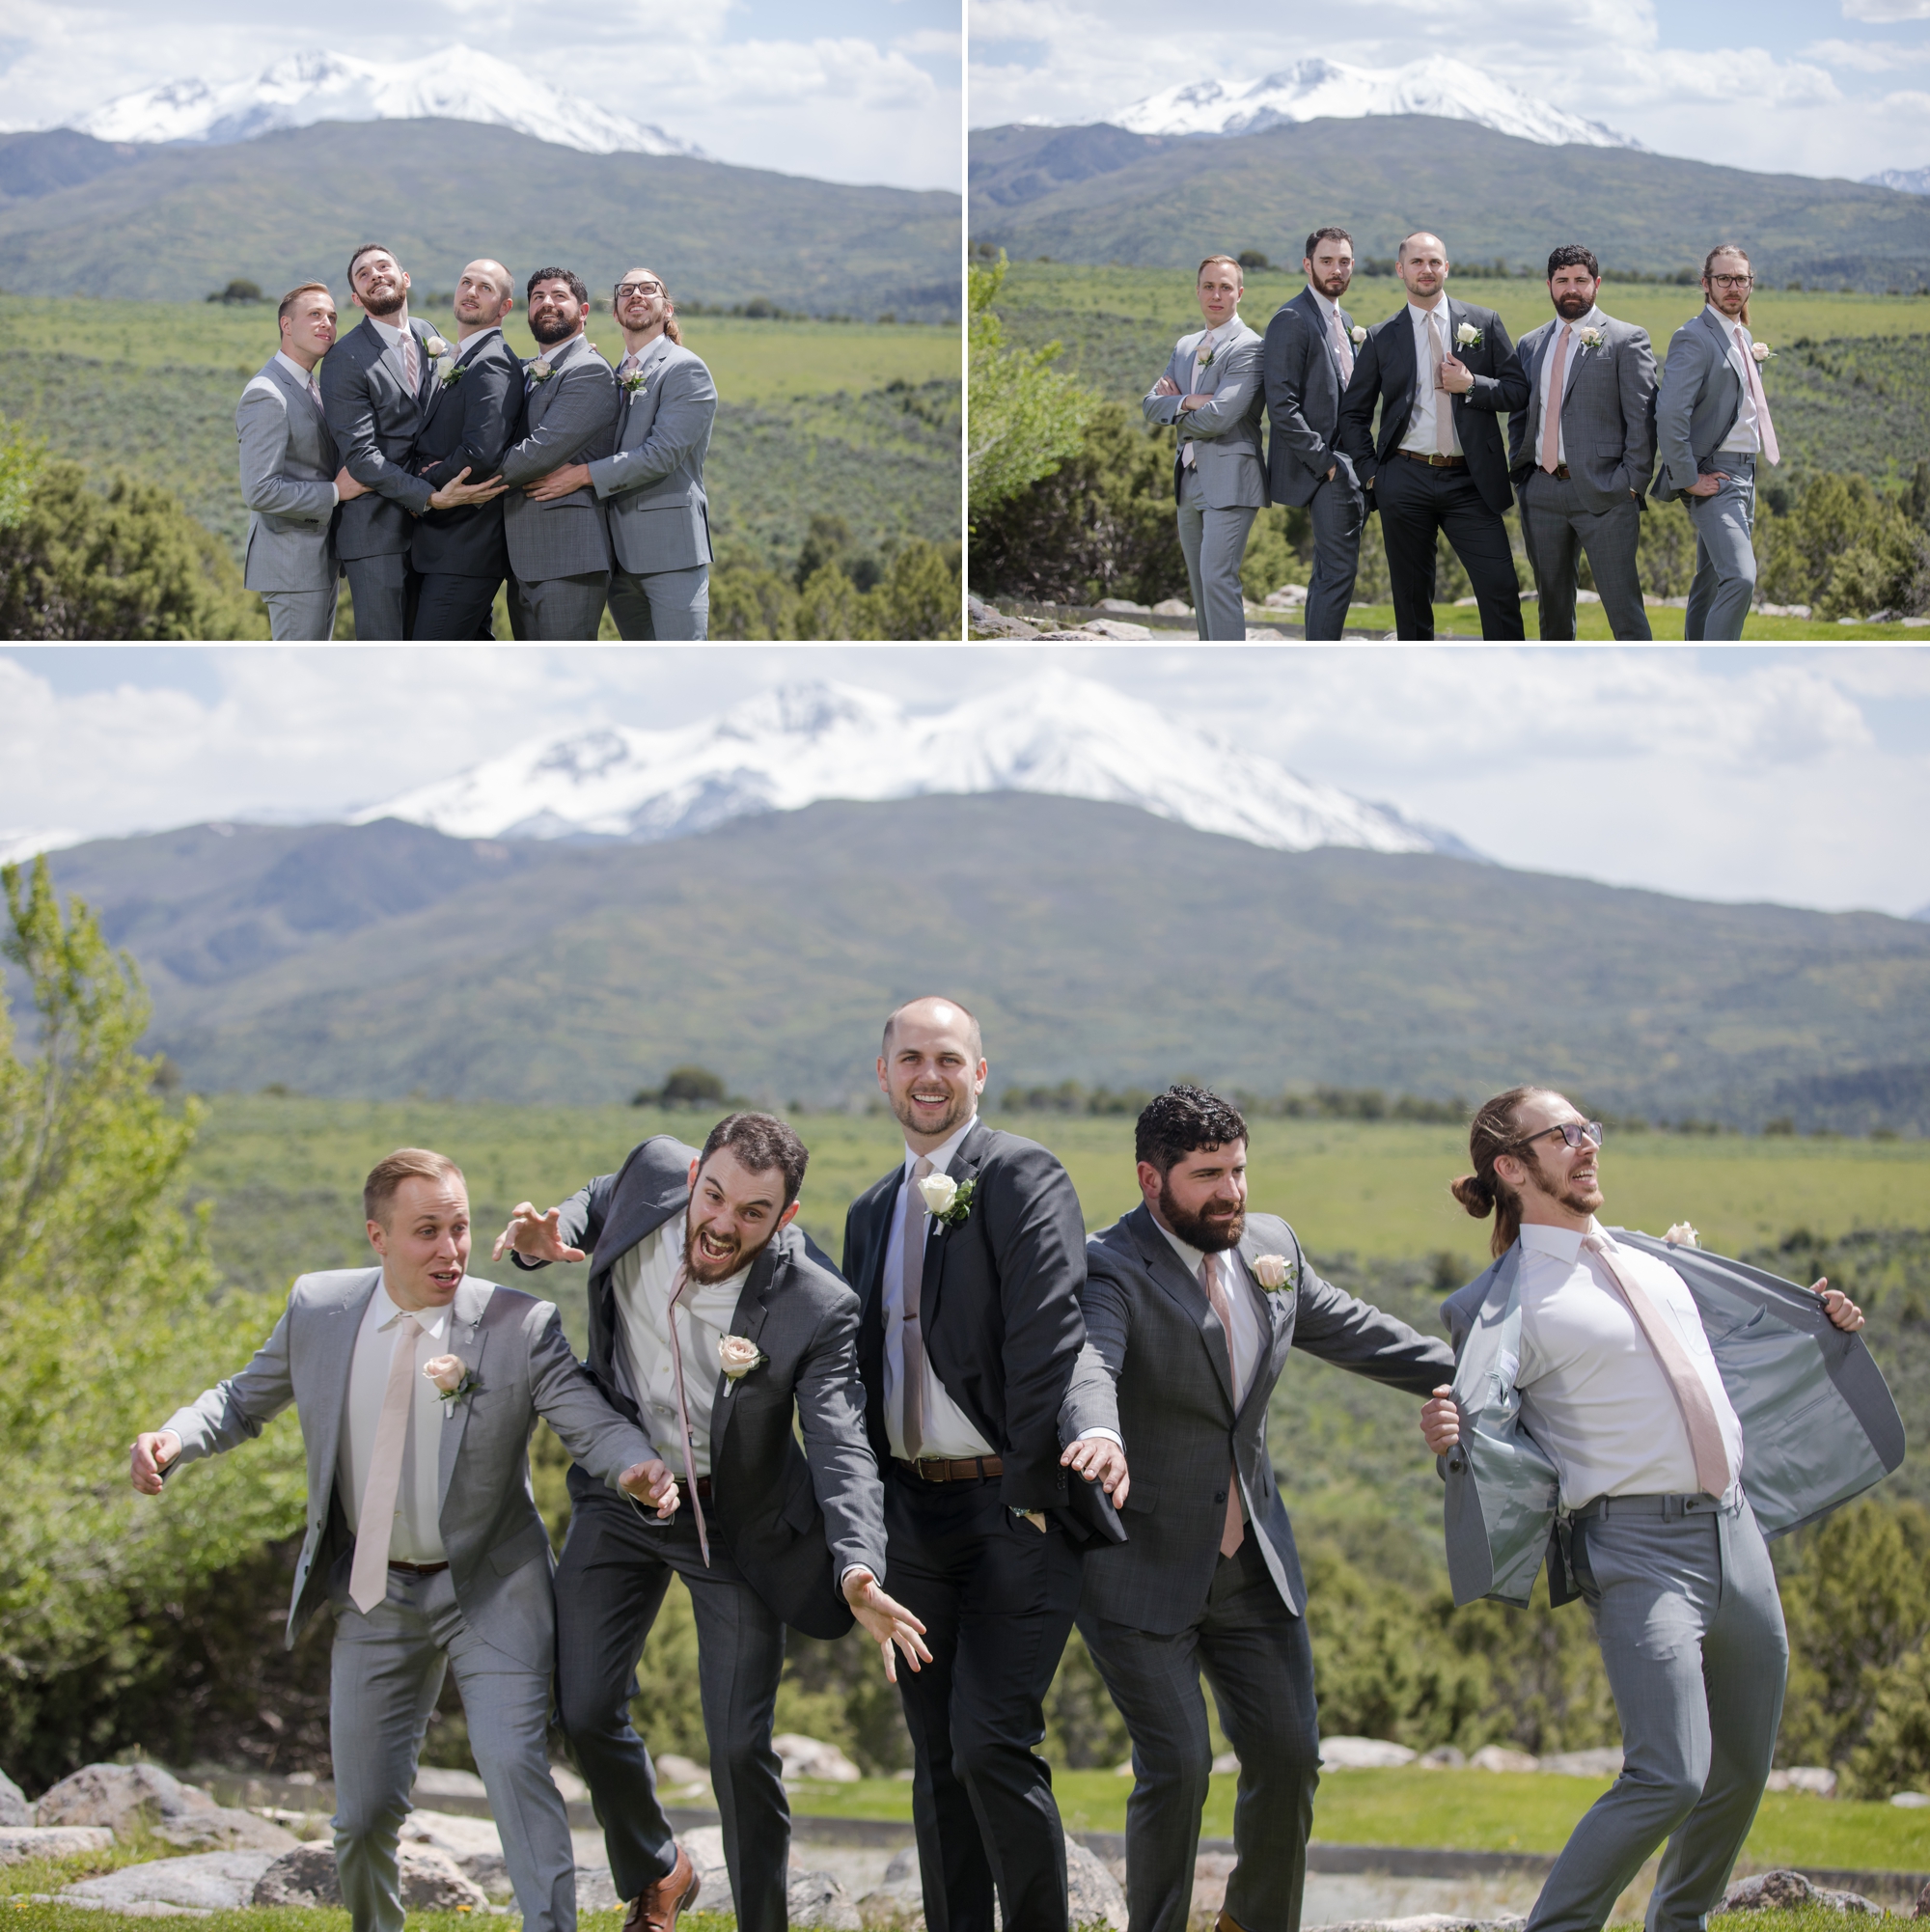 Groom and groomsman portraits at Mountain wedding